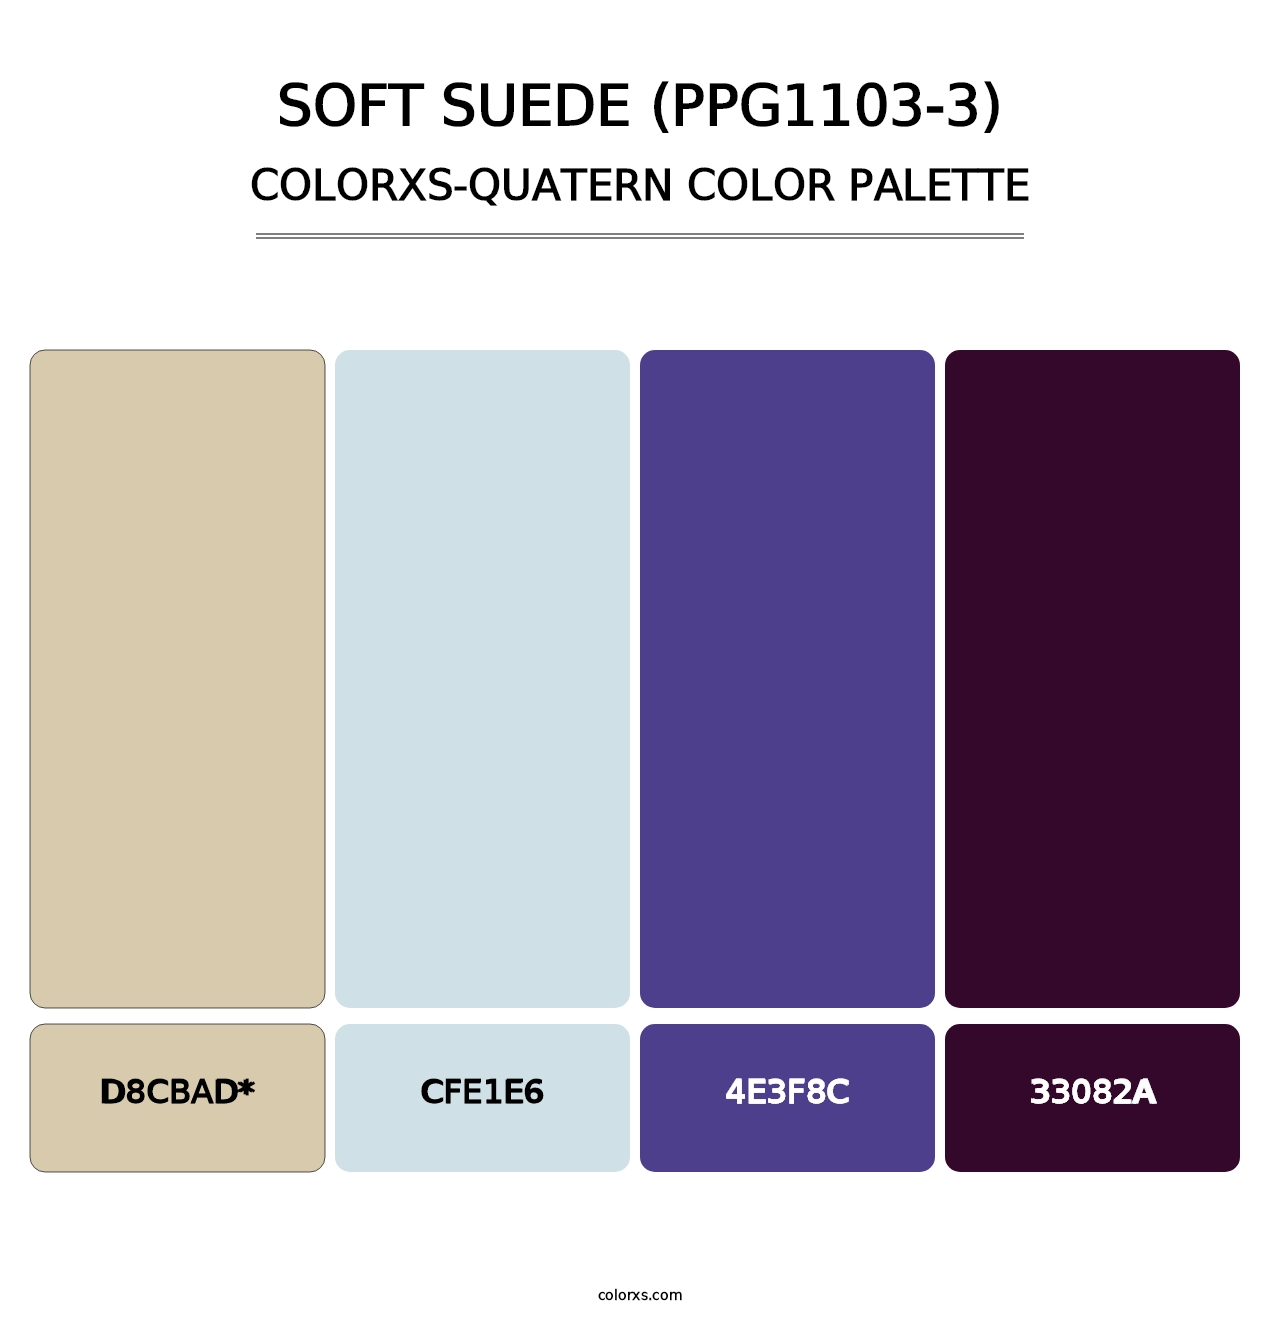 Soft Suede (PPG1103-3) - Colorxs Quatern Palette